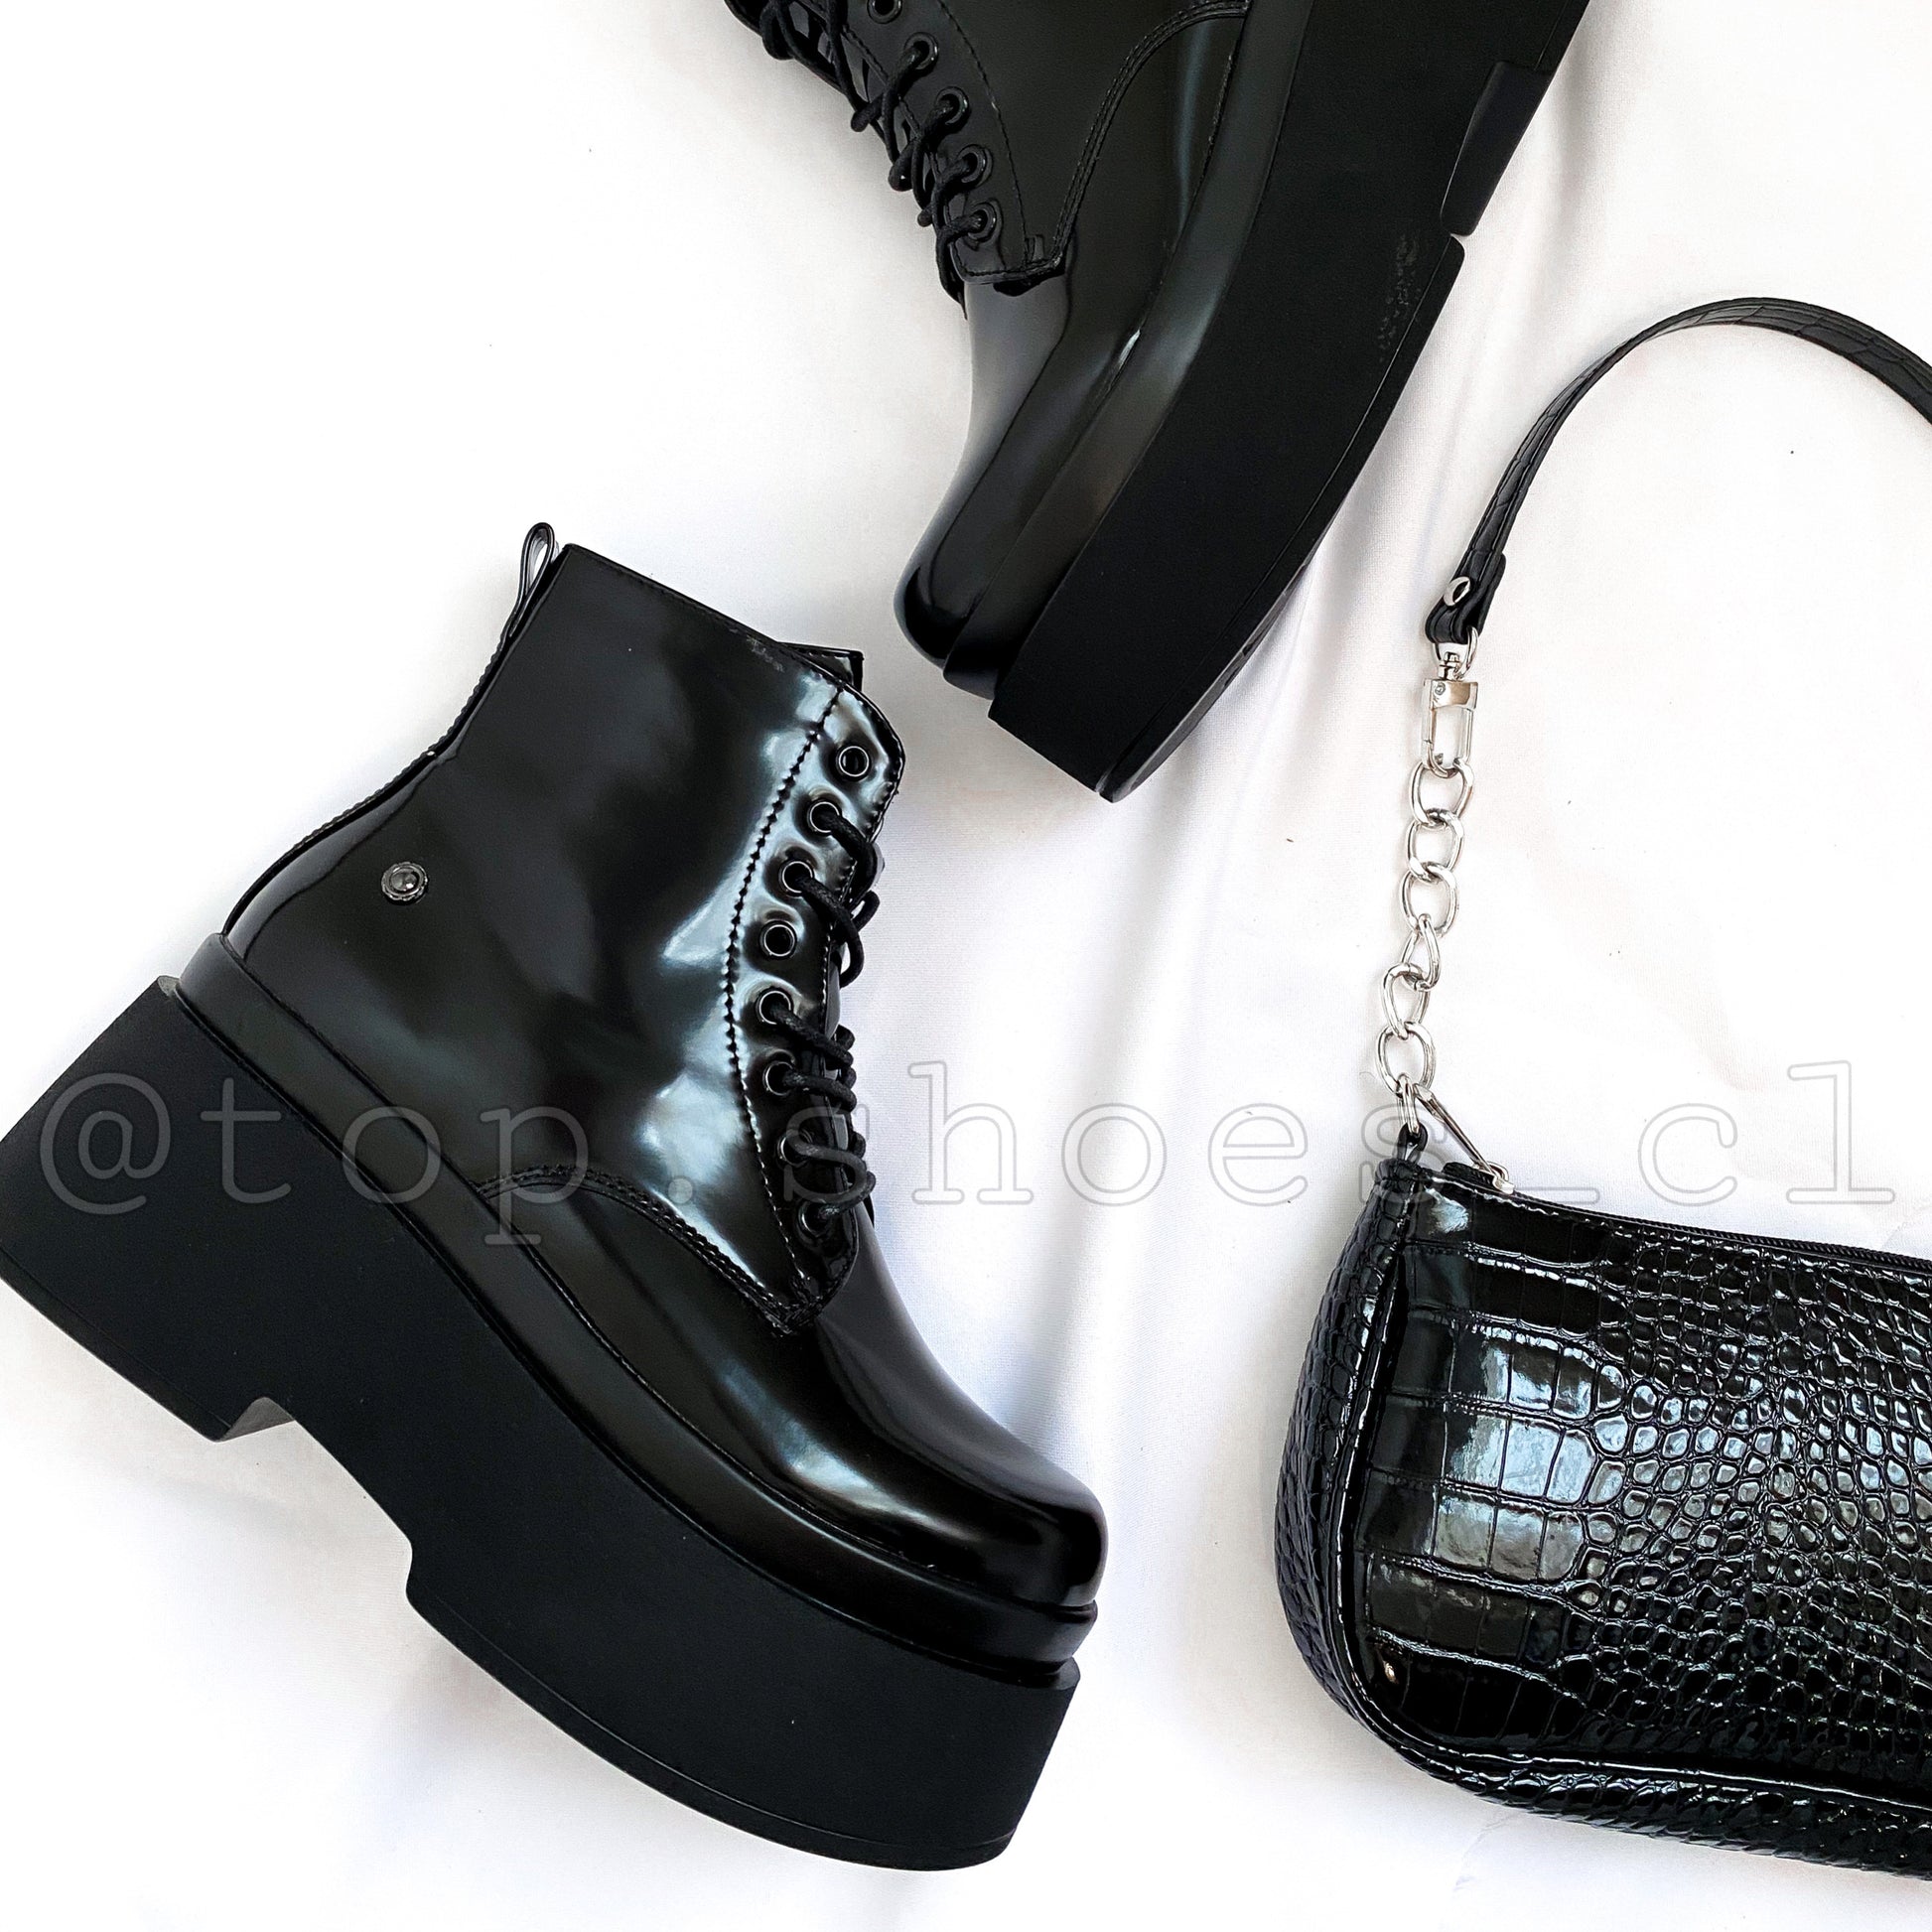 Dona black - Topshoes